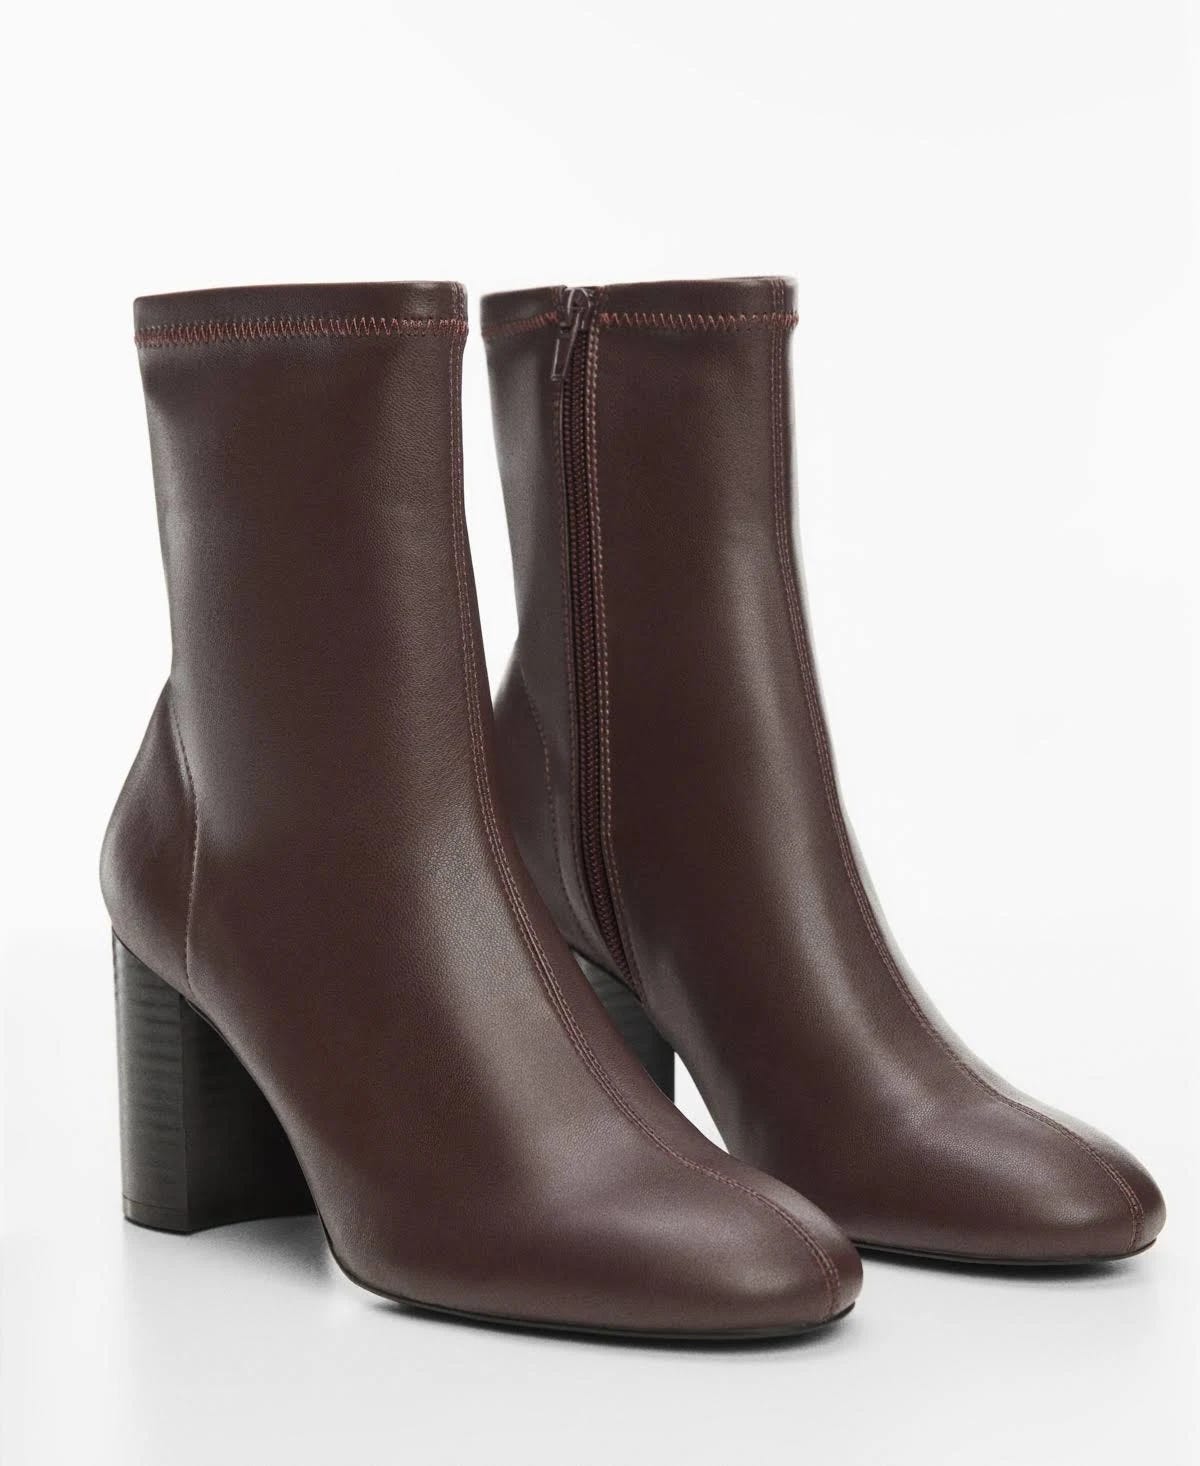 Mango Burgundy Heeled Ankle Boots: Stylish and Comfortable | Image